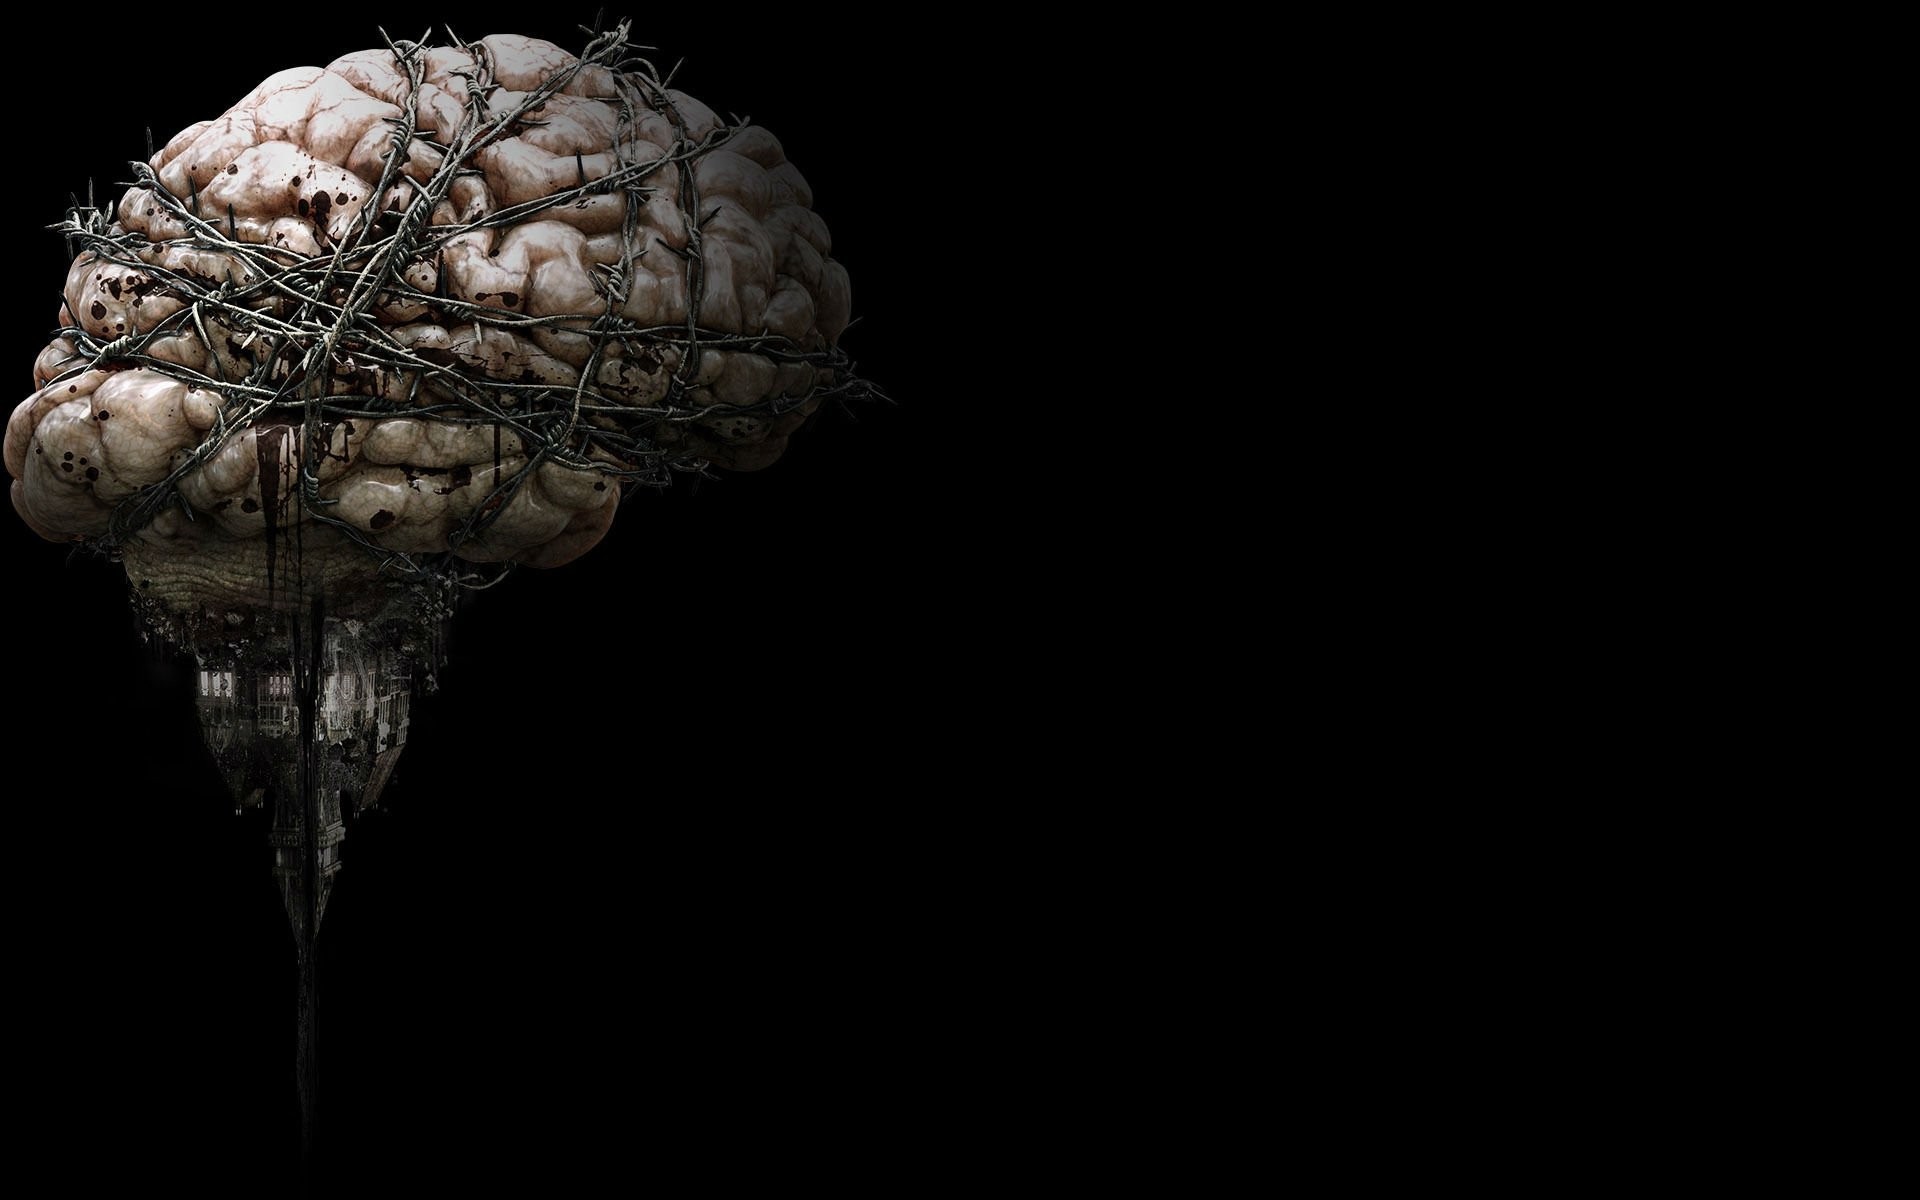 brain wallpaper hd,head,still life photography,brain,organ,organism